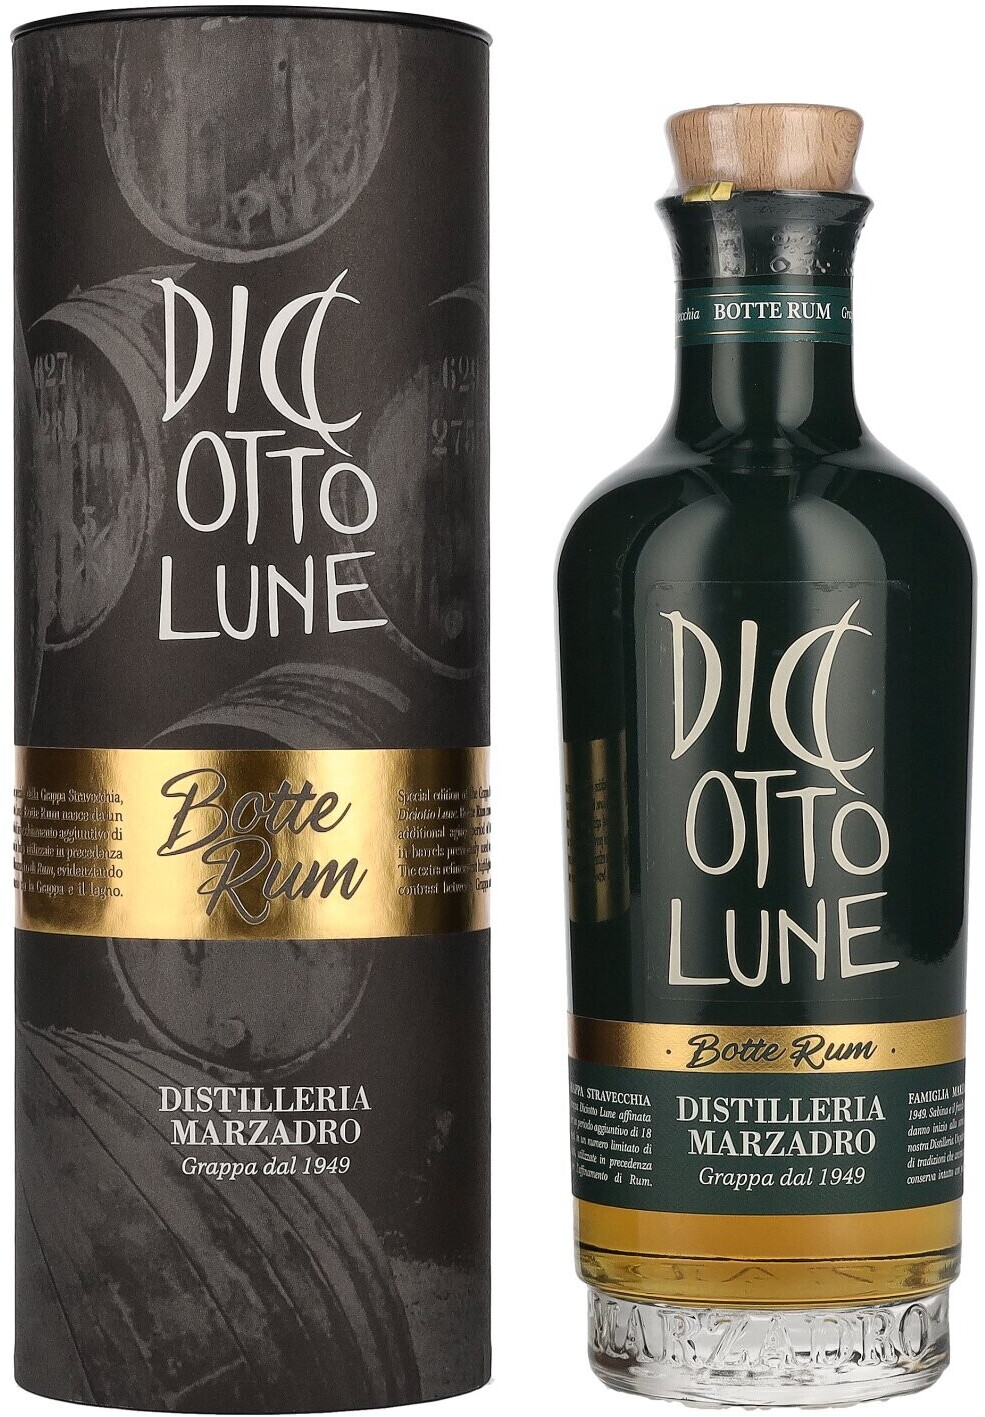 Rum 42% € Preisvergleich bei ab Botte 26,90 0,5l | Marzadro Diciotto Lune